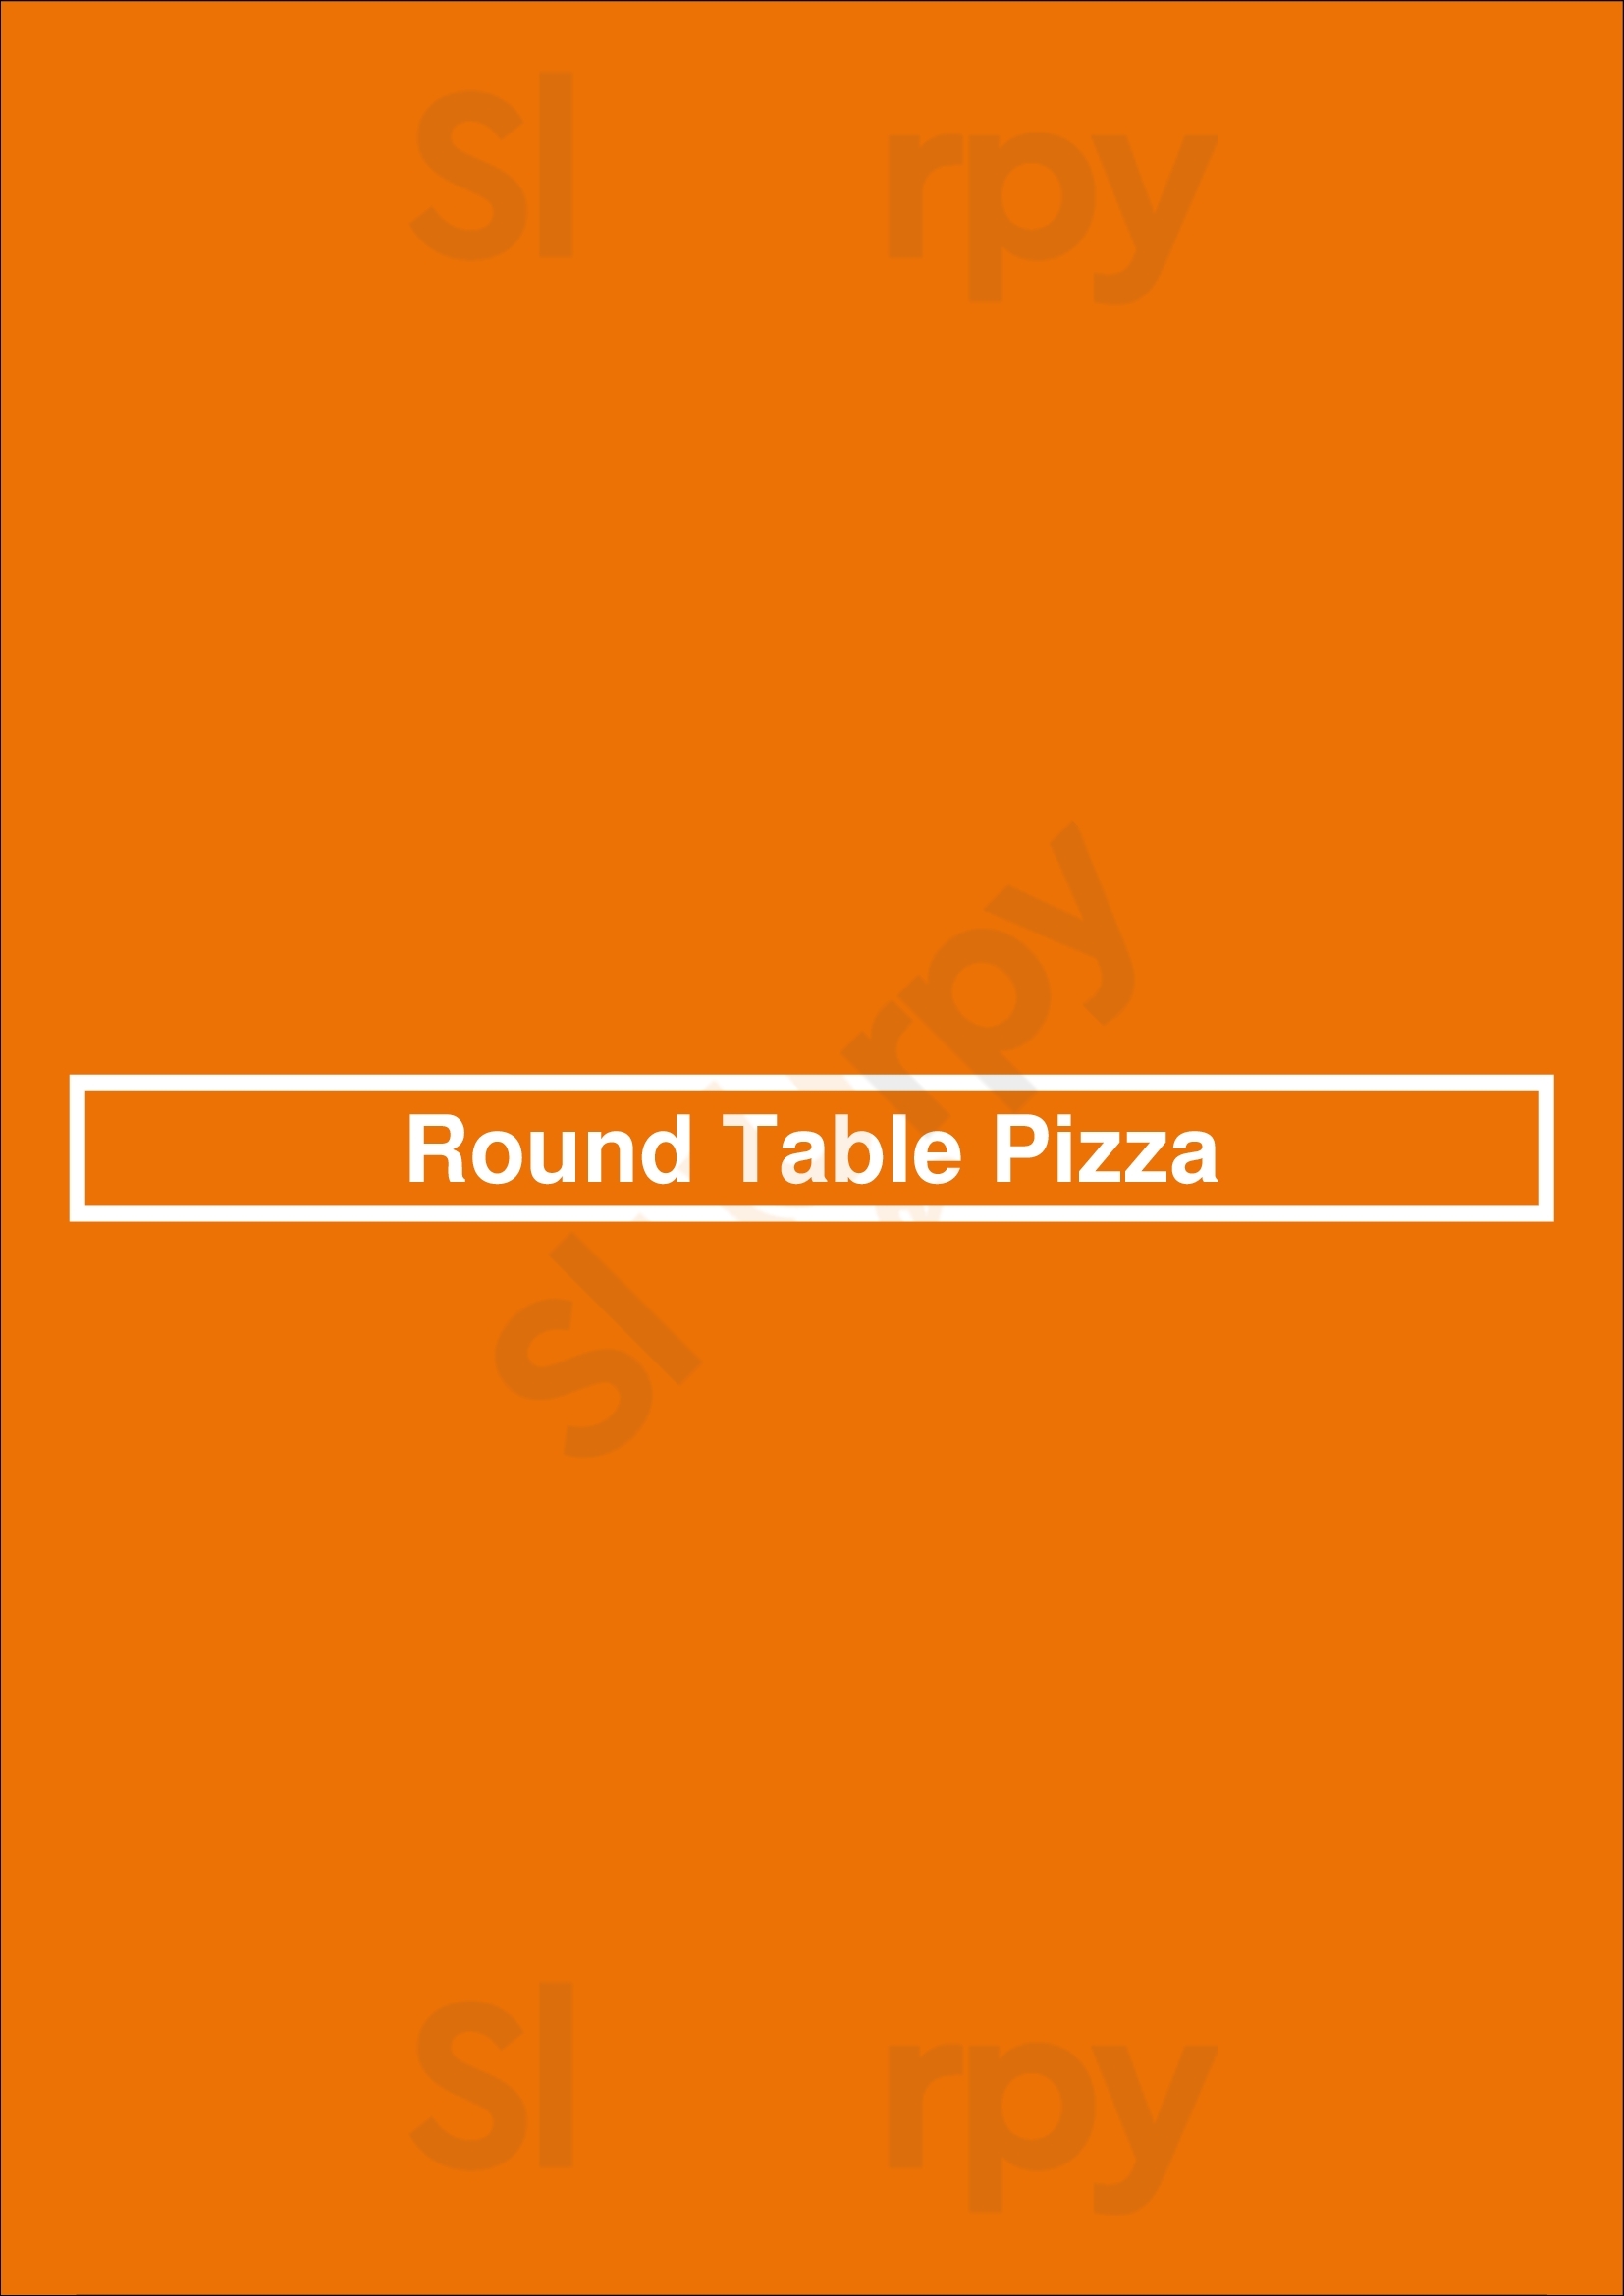 Round Table Pizza Newport Beach Menu - 1